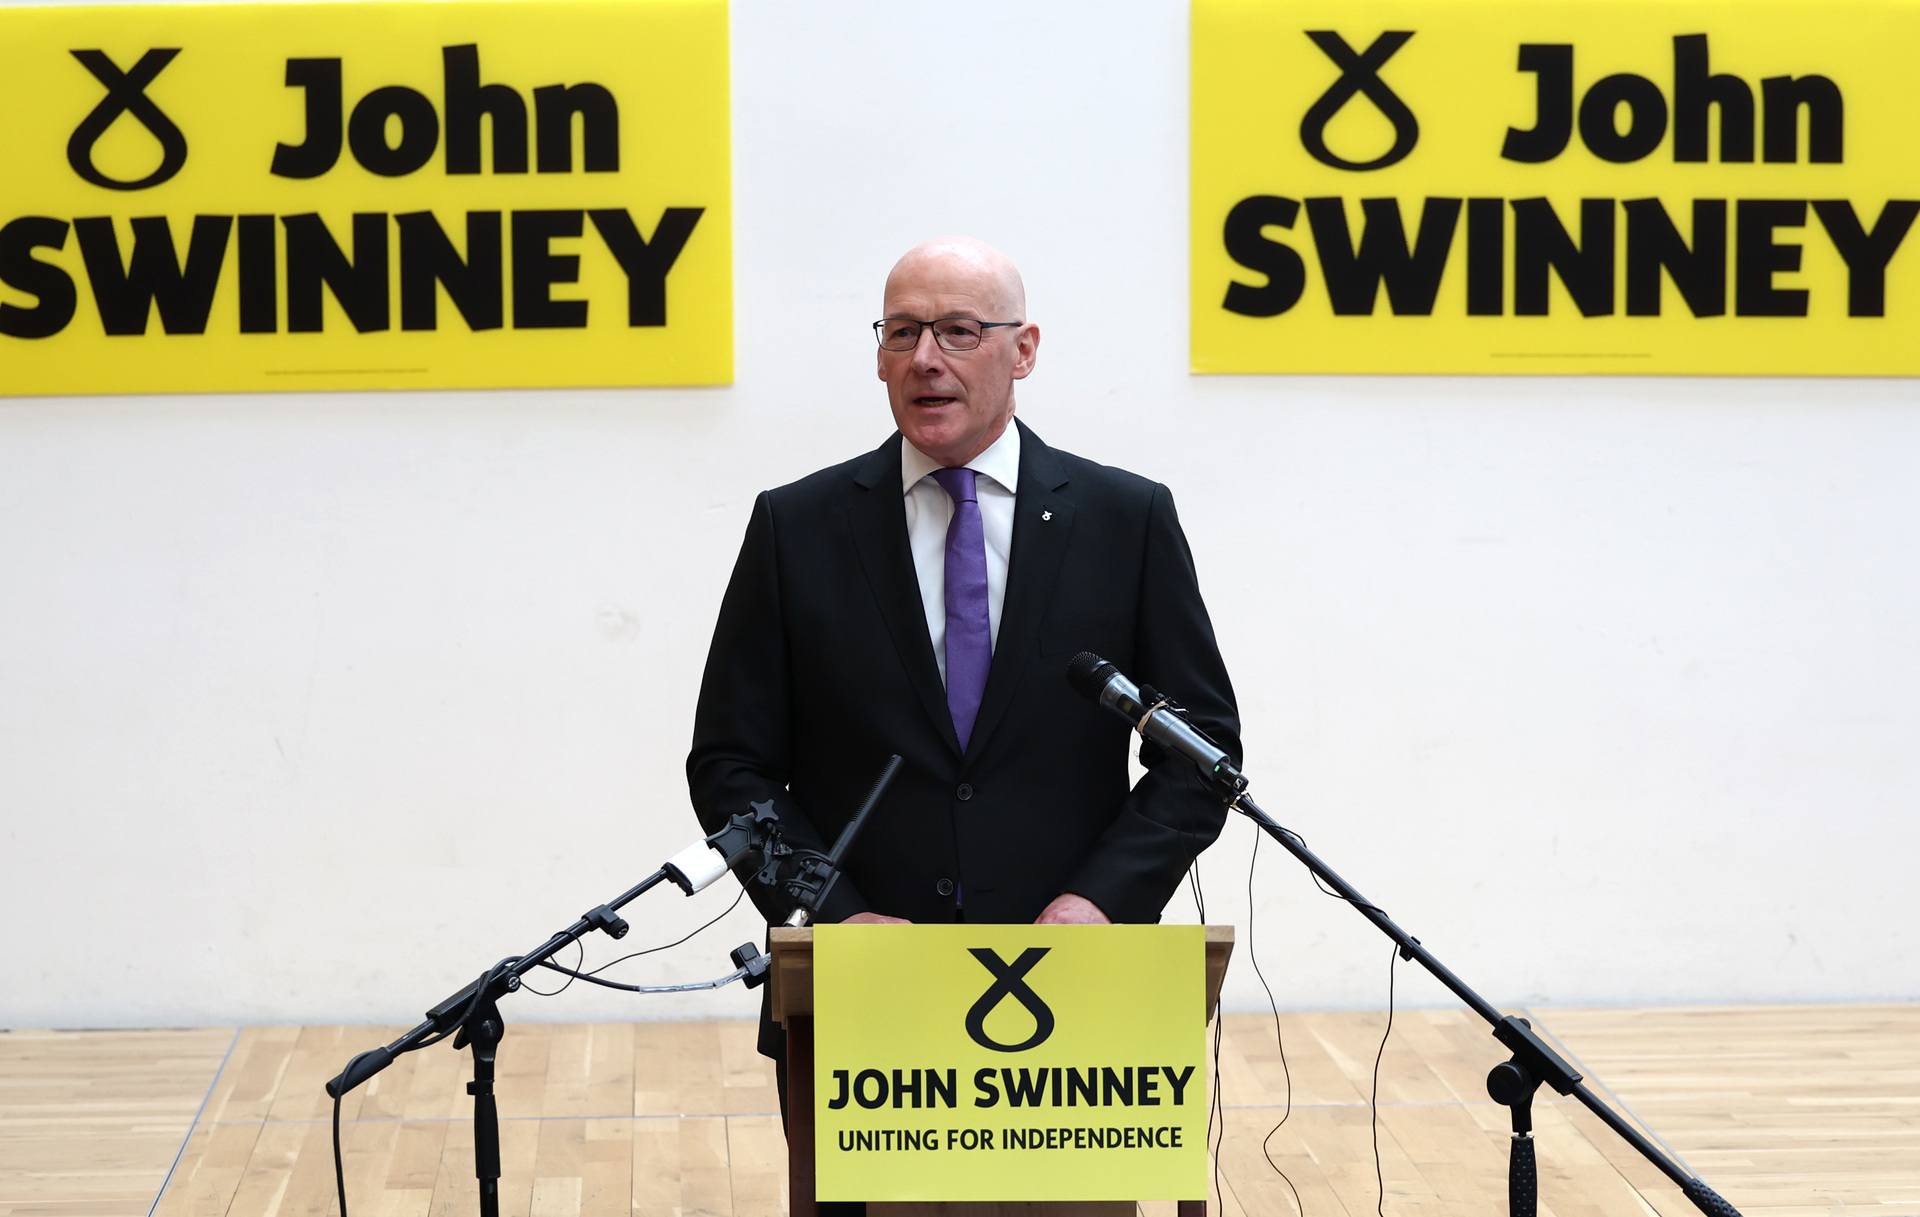 John Swinney speaks as he launches his SNP leadership bid on May 2.